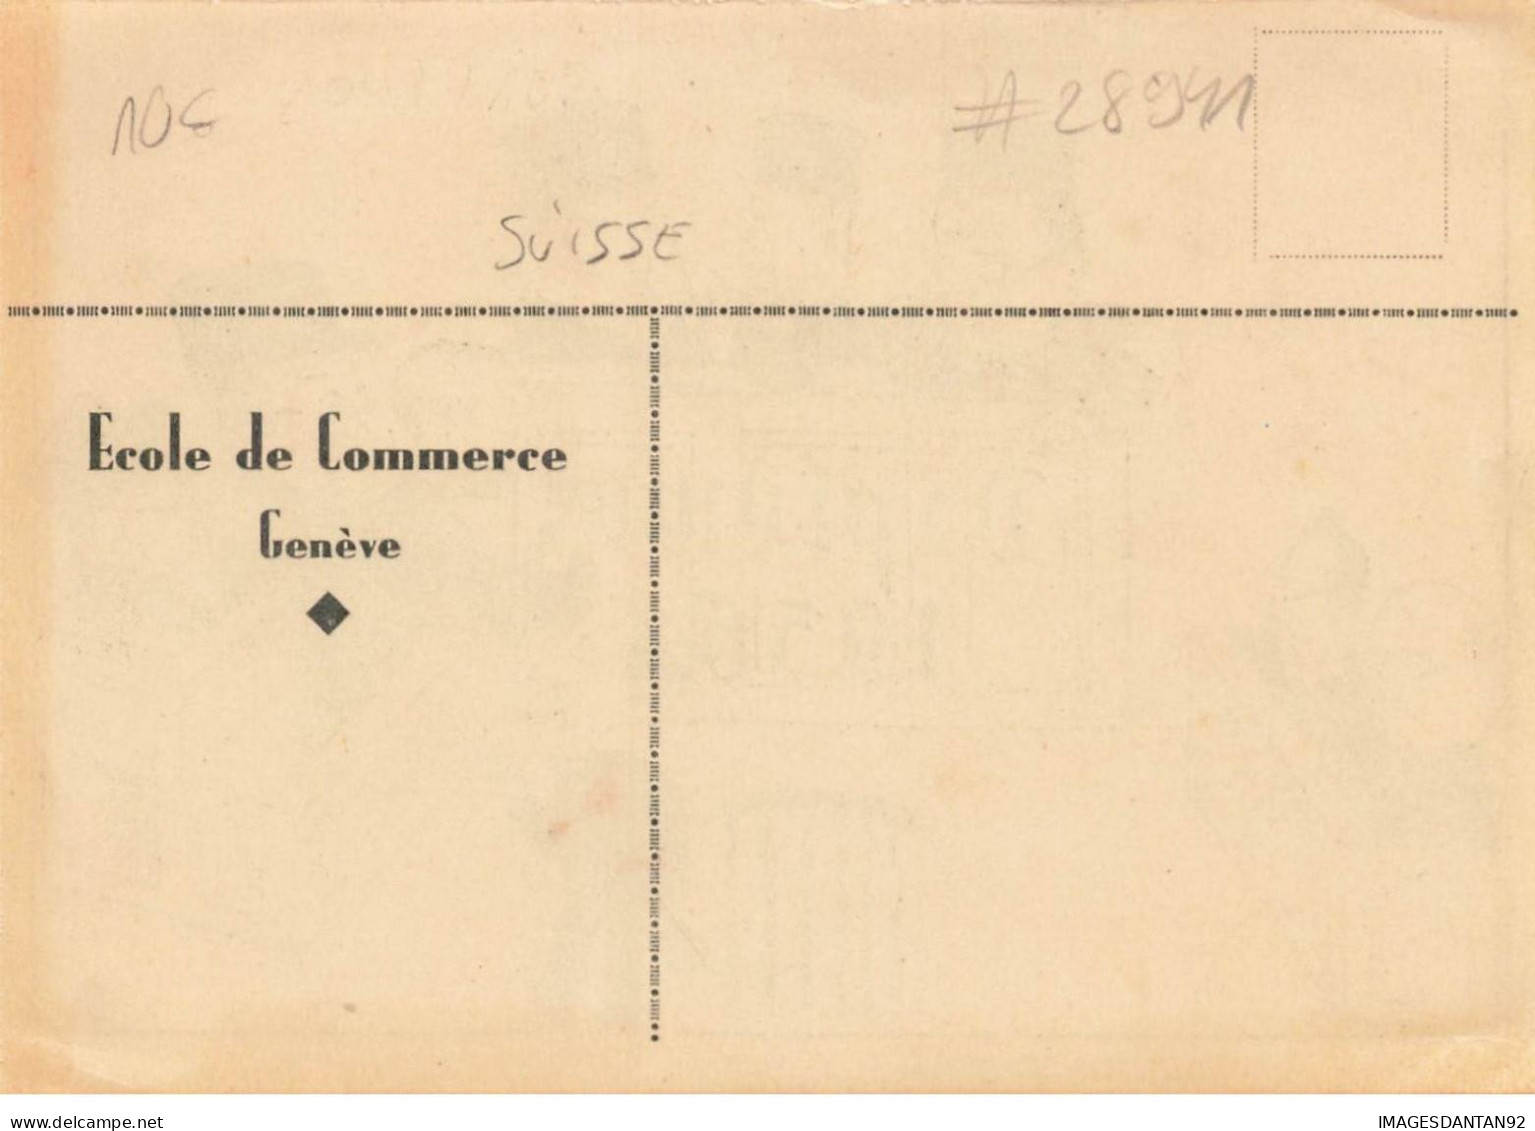 SUISSE GENEVE #28941 ECOLE DE COMMERCE DIPLOME 1936 DESSIN CARICATURE HUMOUR AVOCAT JUGE LOI - Genève